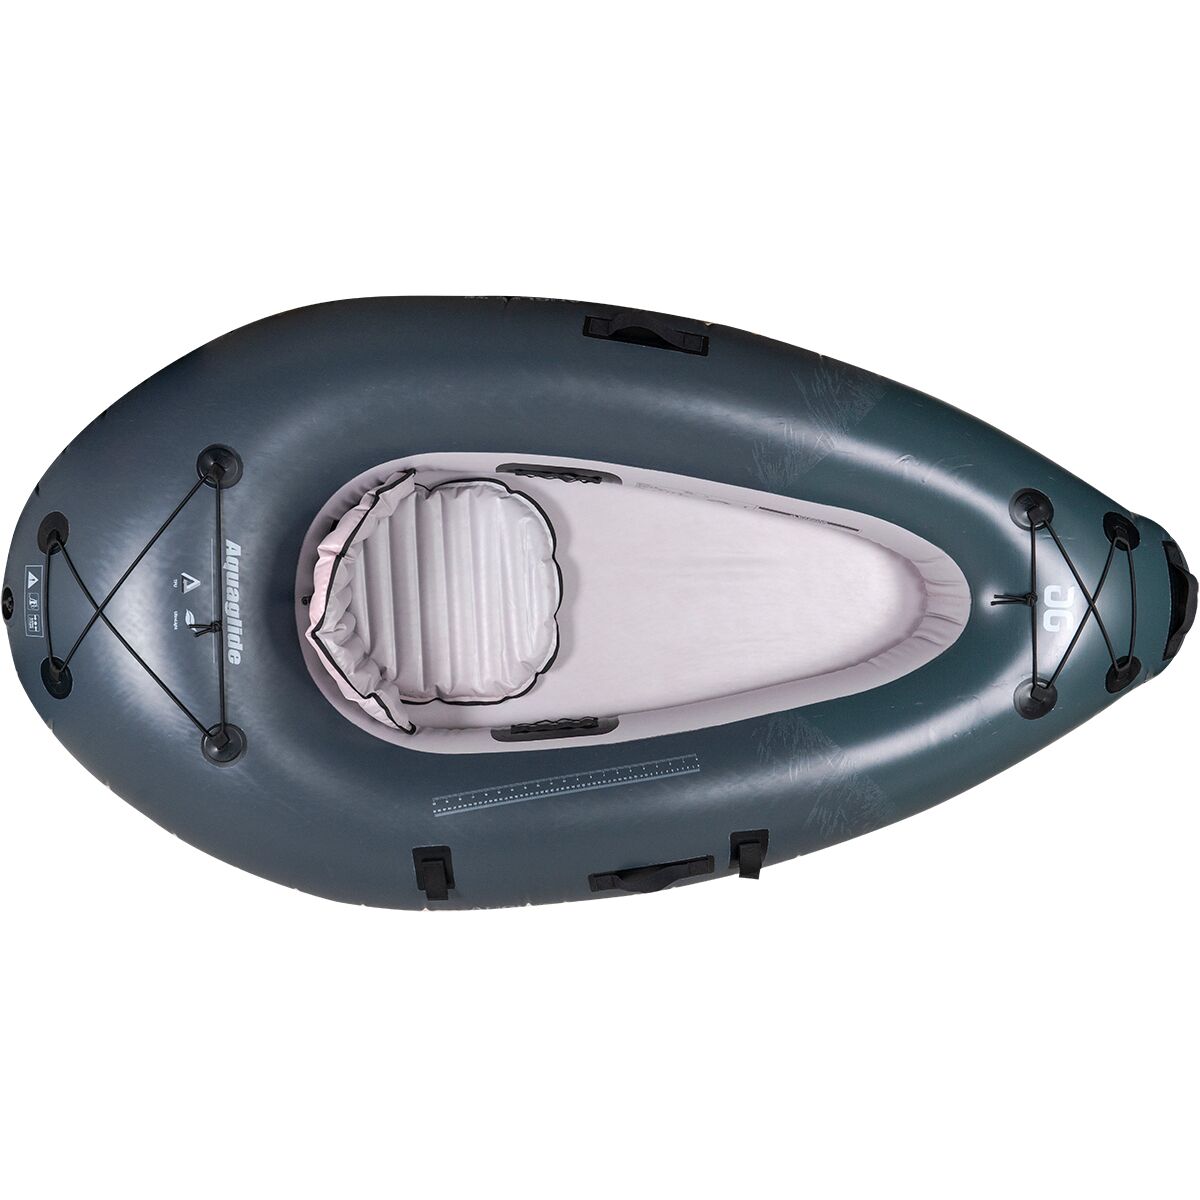 Aquaglide Backwoods Angler 75 Inflatable Kayak